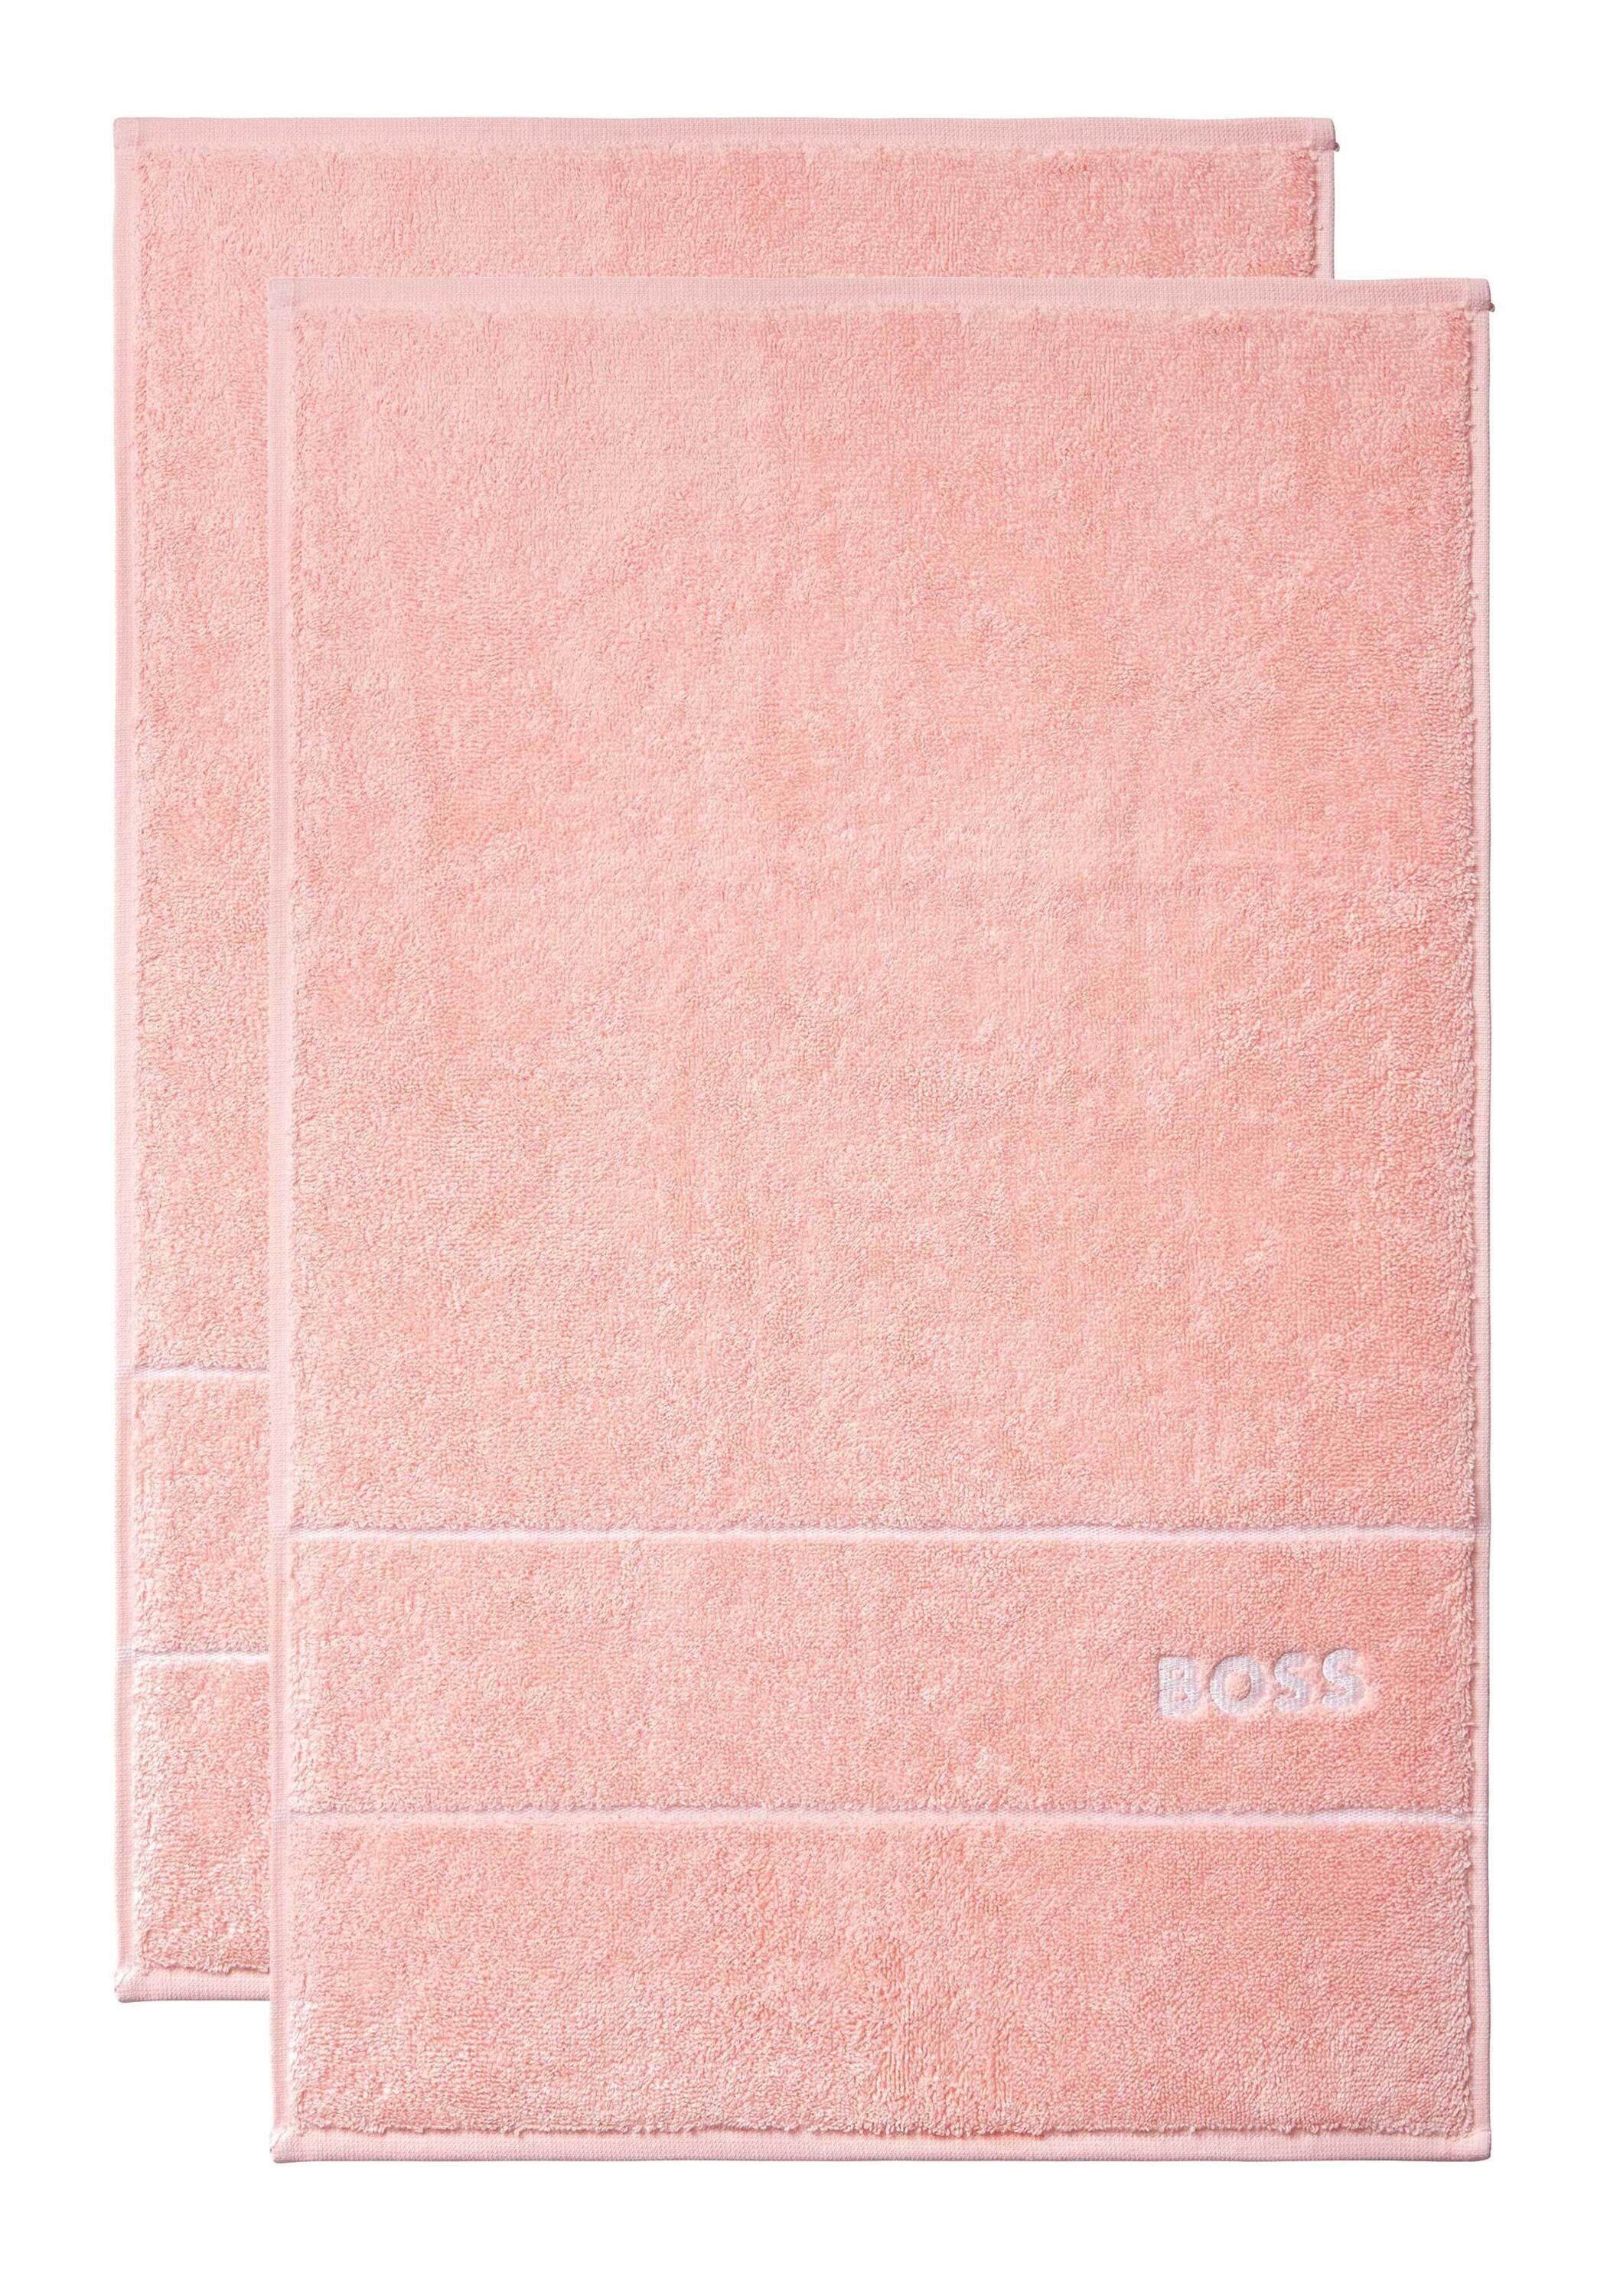 Hugo Boss Home Gästehandtücher PLAIN (2tlg), 100% Baumwolle, mit modernem Design PRIMRON